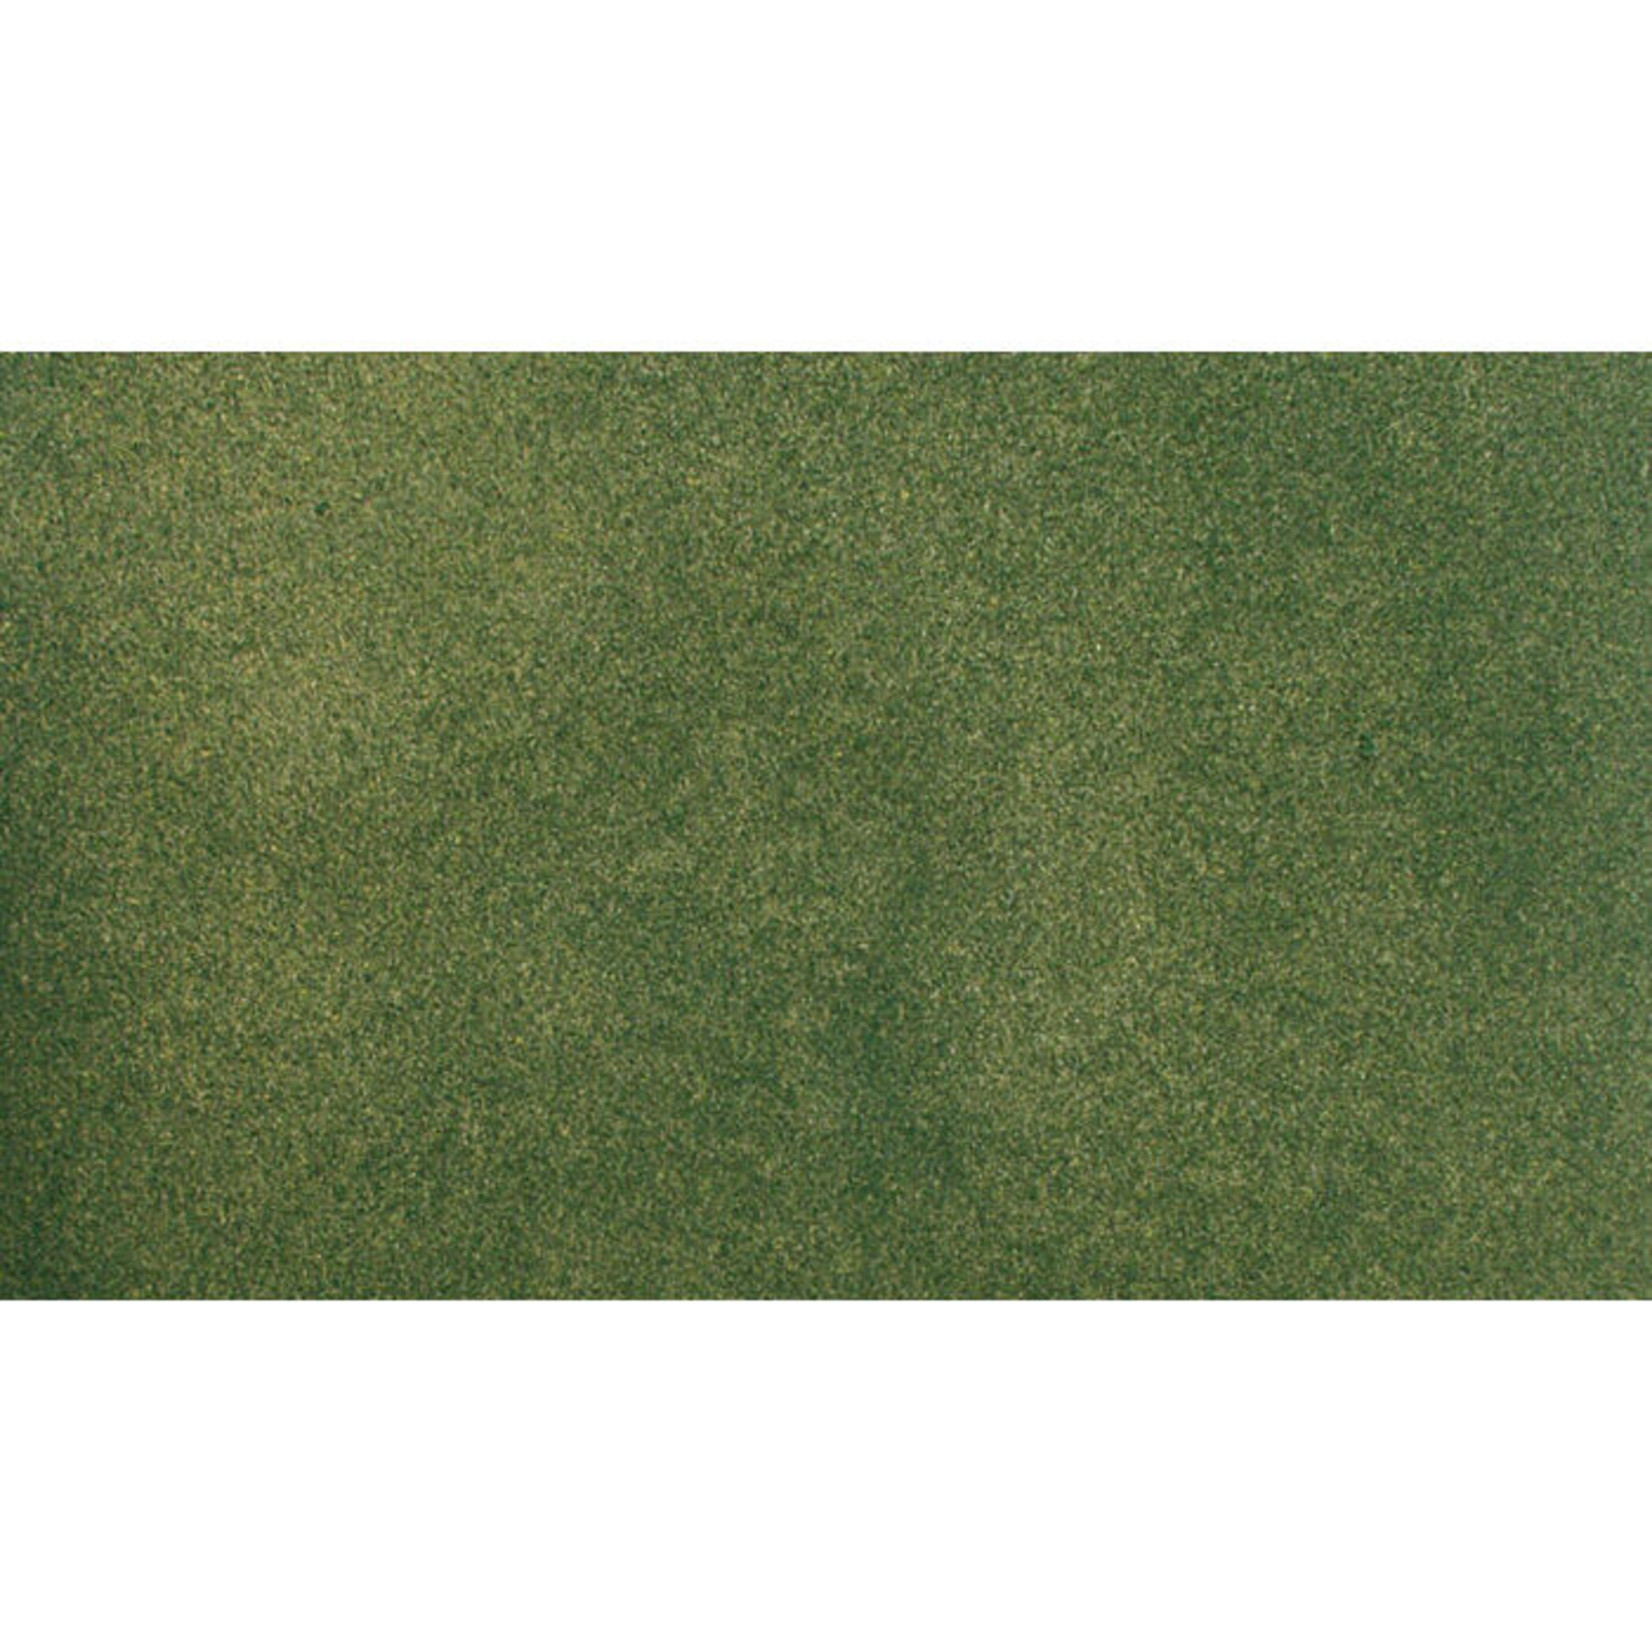 Woodland Scenics 33"x 50" Grass Mat, Green